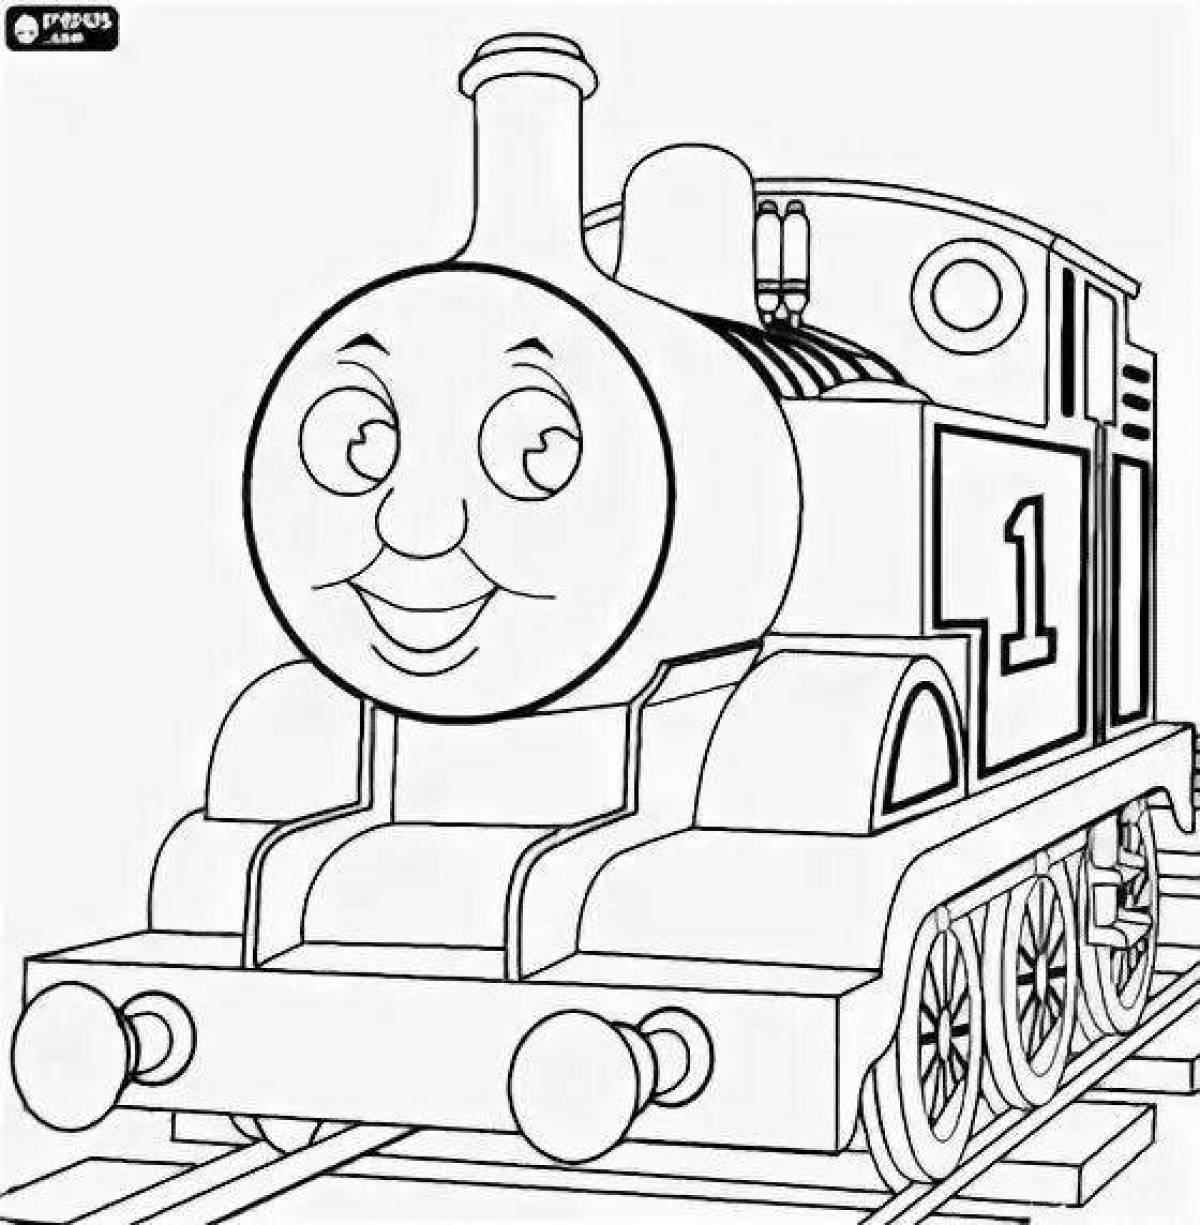 Thomas the Tank Engine fun coloring page